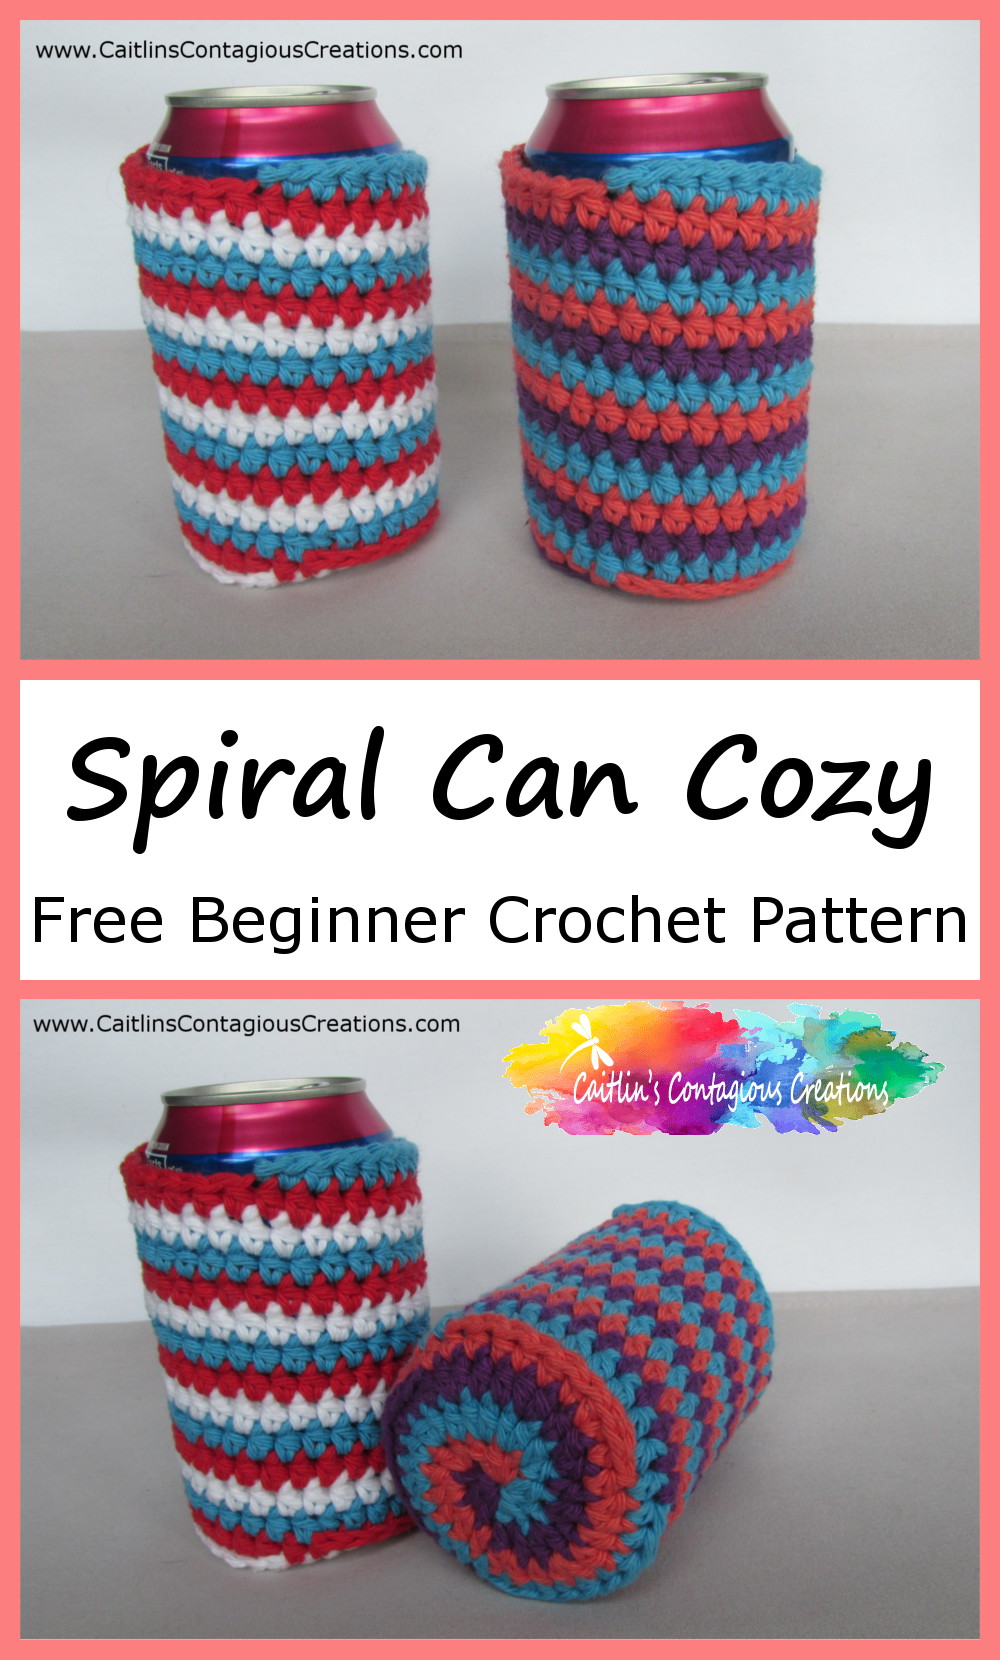 https://www.caitlinscontagiouscreations.com/wp-content/uploads/2019/06/Pinterest02_Spiral-Can-Cozy-Free-Crochet-Pattern.jpg